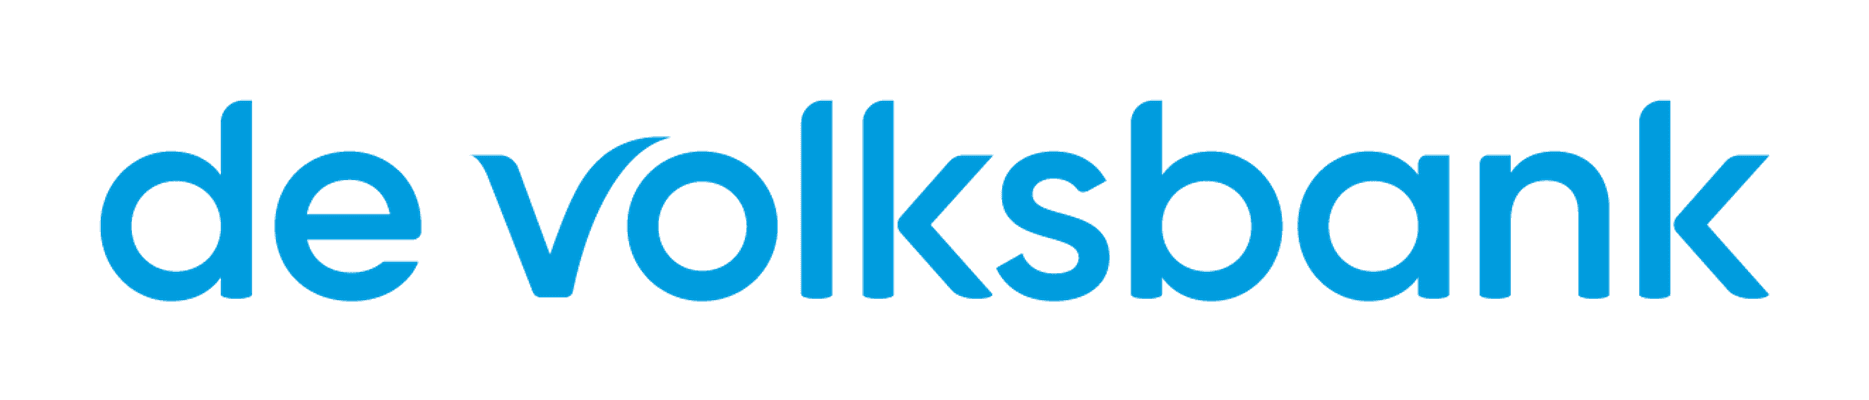 Volksbank logo